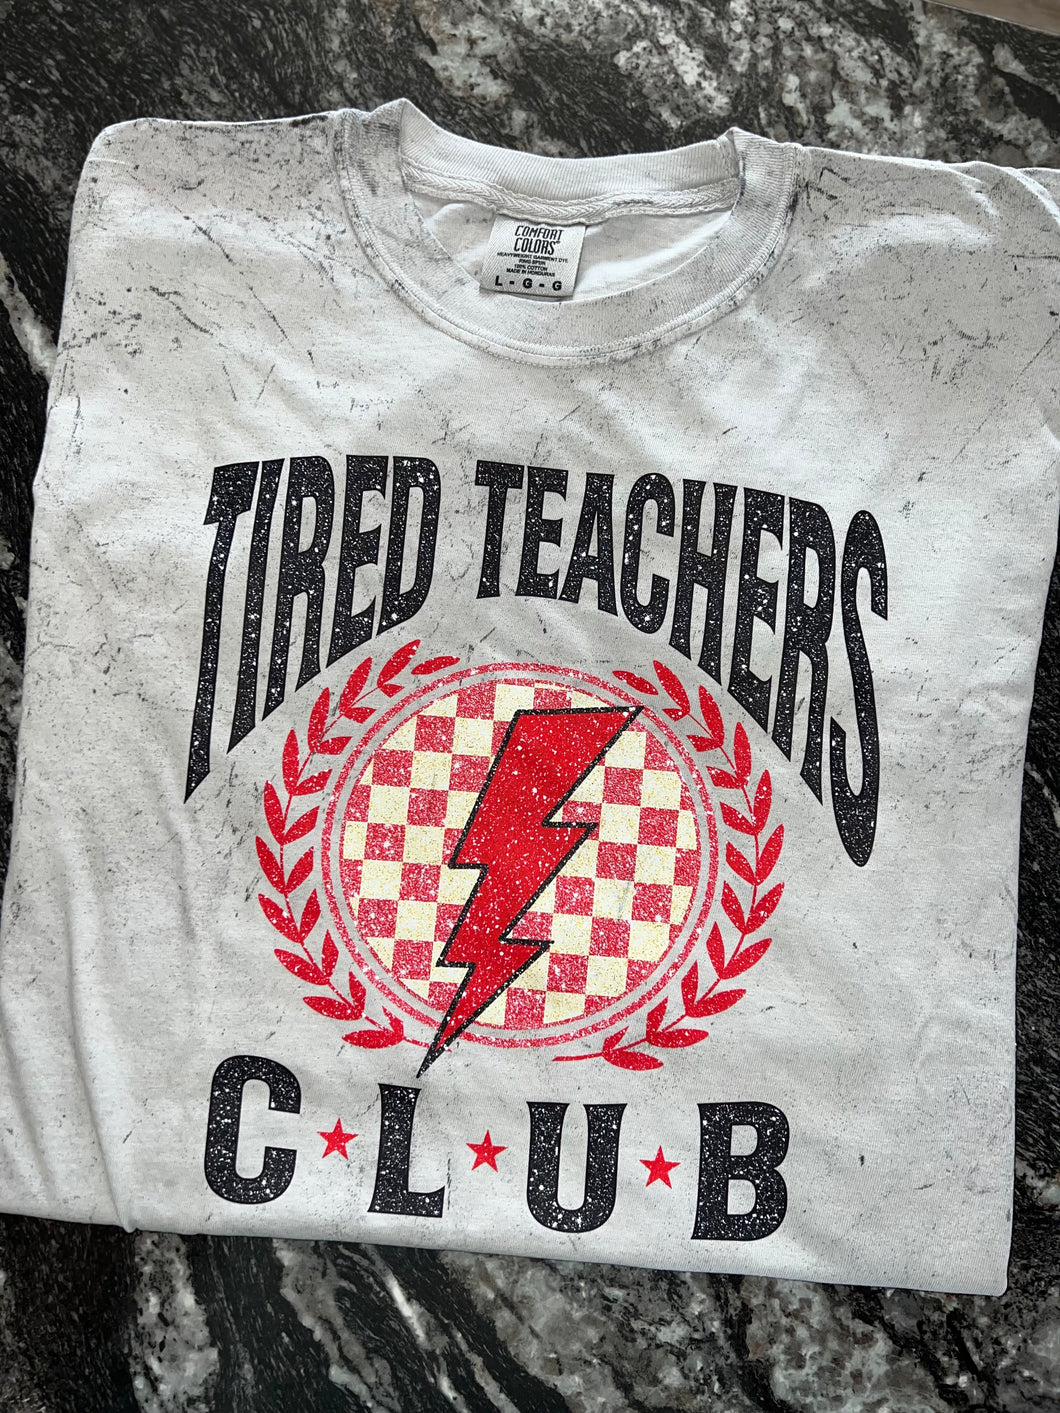 Tired Teachers Club